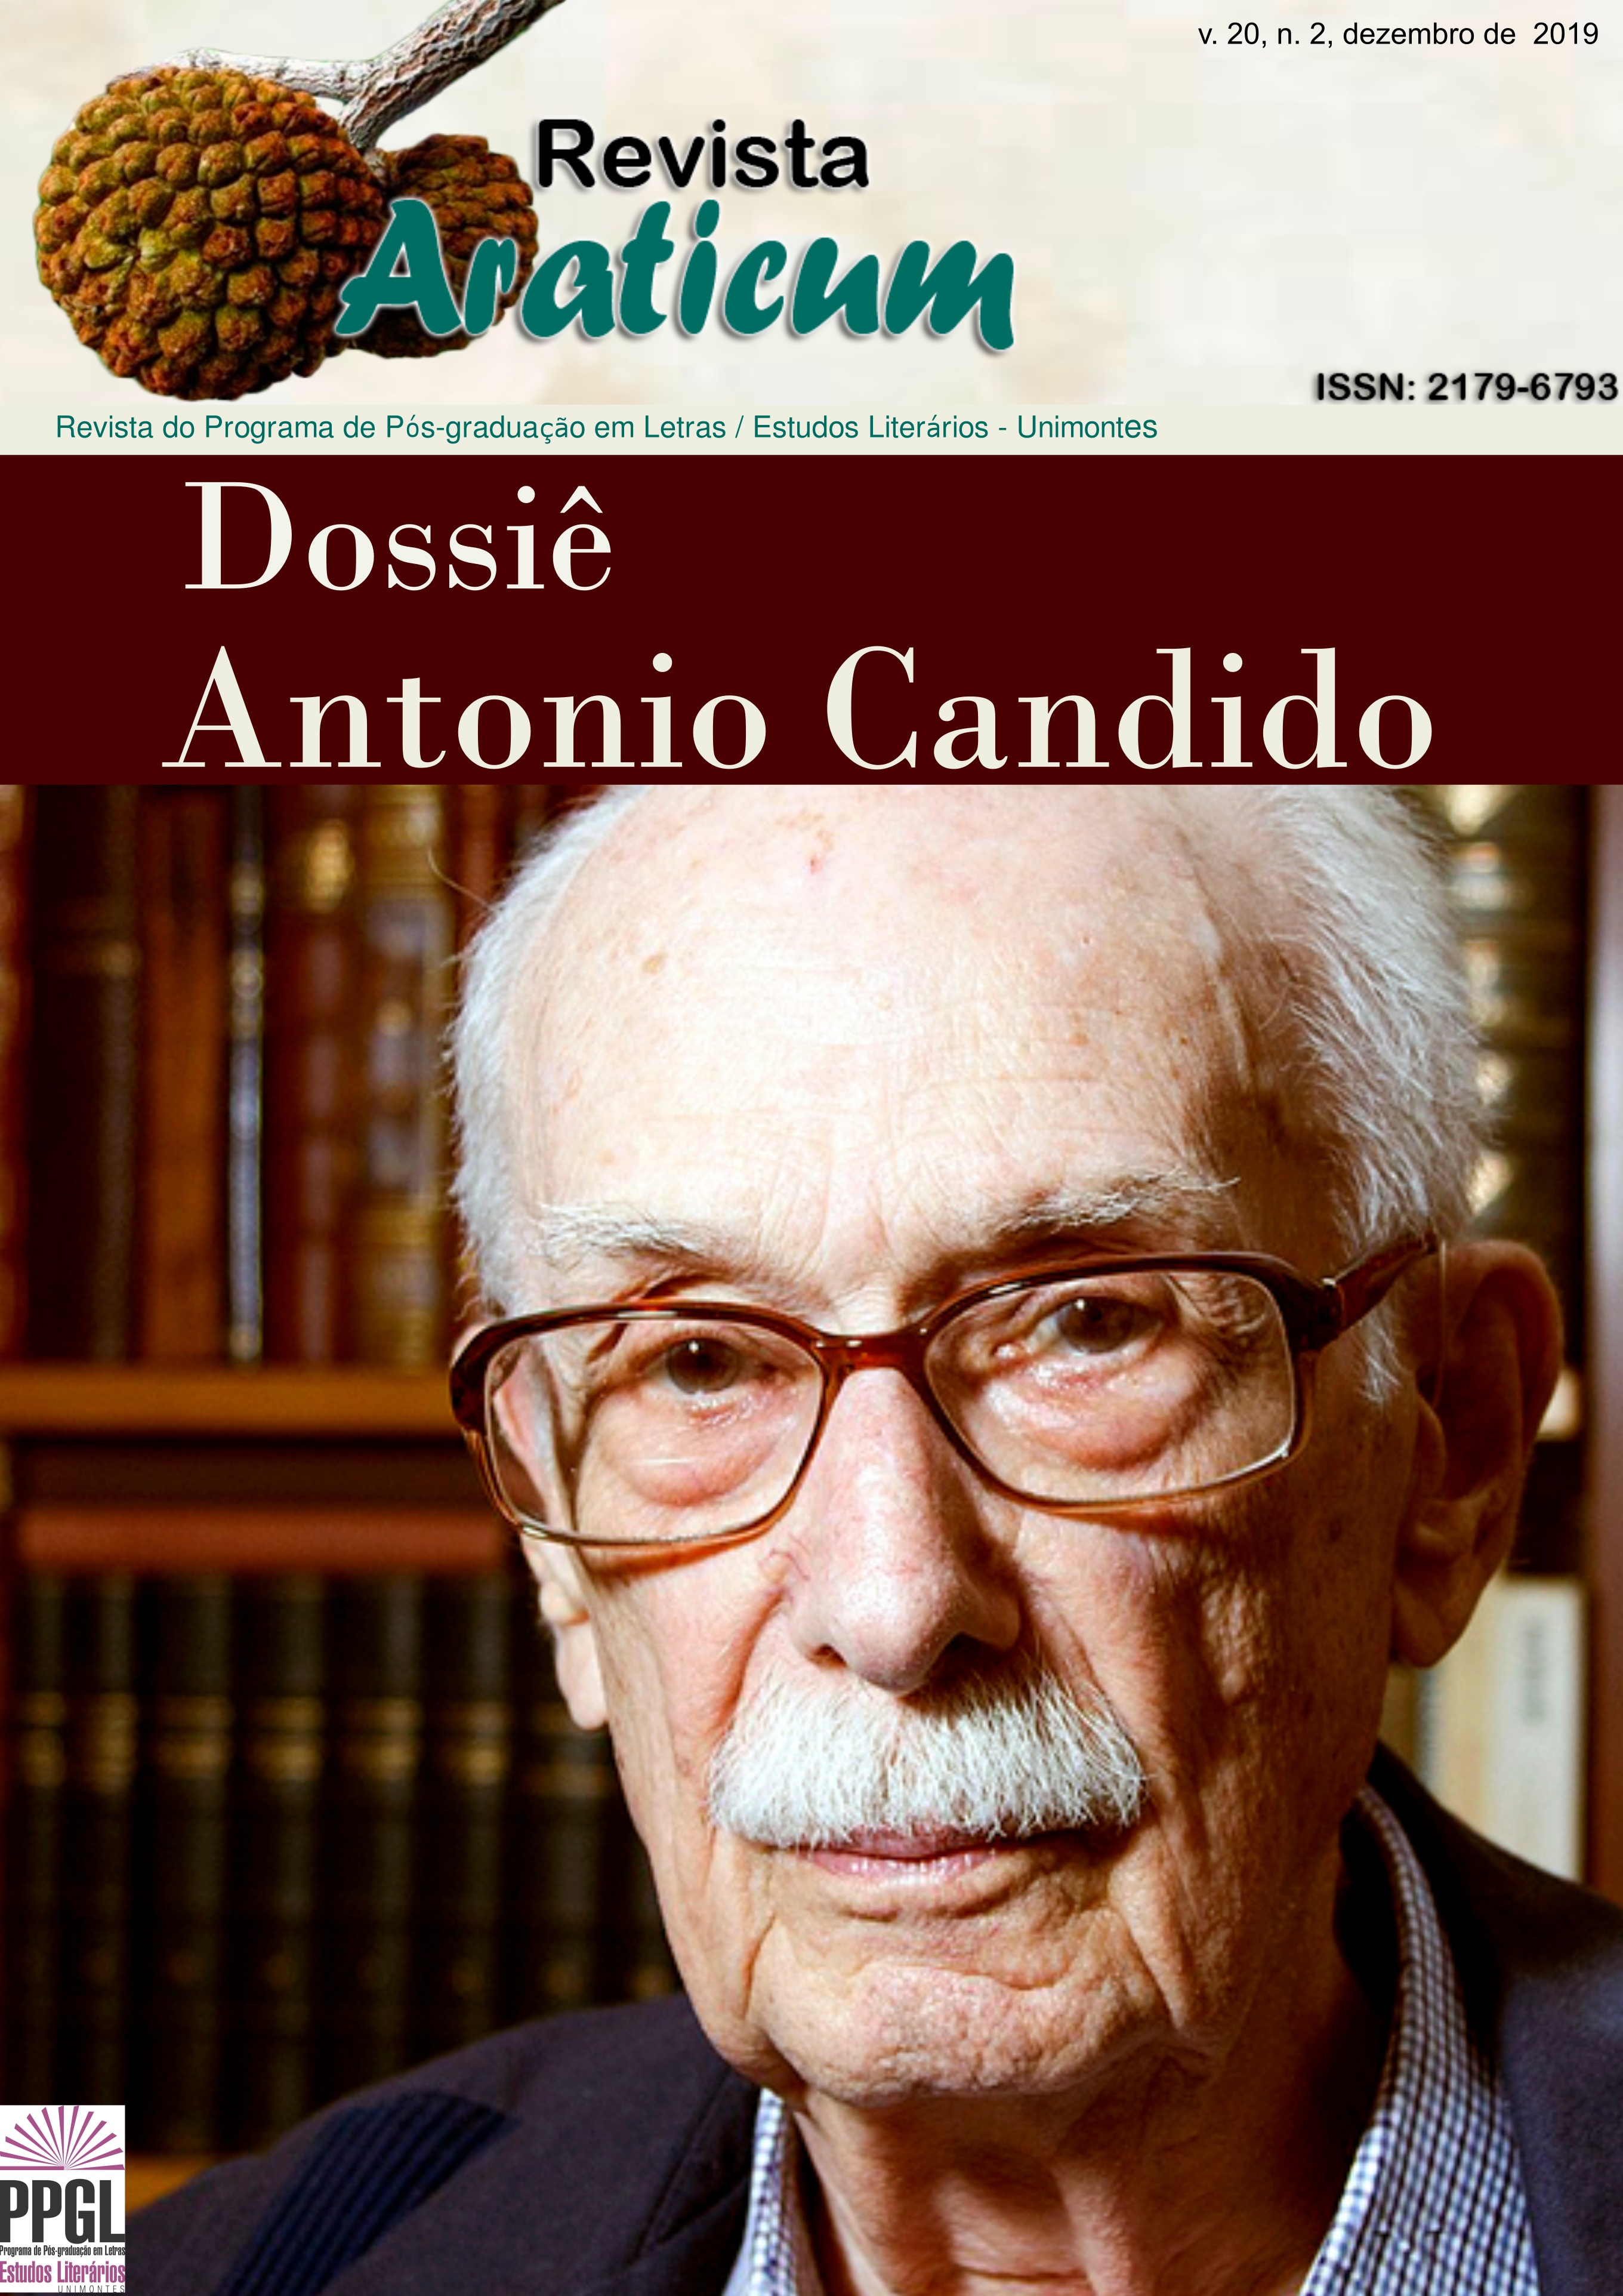 					Ver Vol. 20 Núm. 2 (2019):  Dossiê Antonio Candido
				